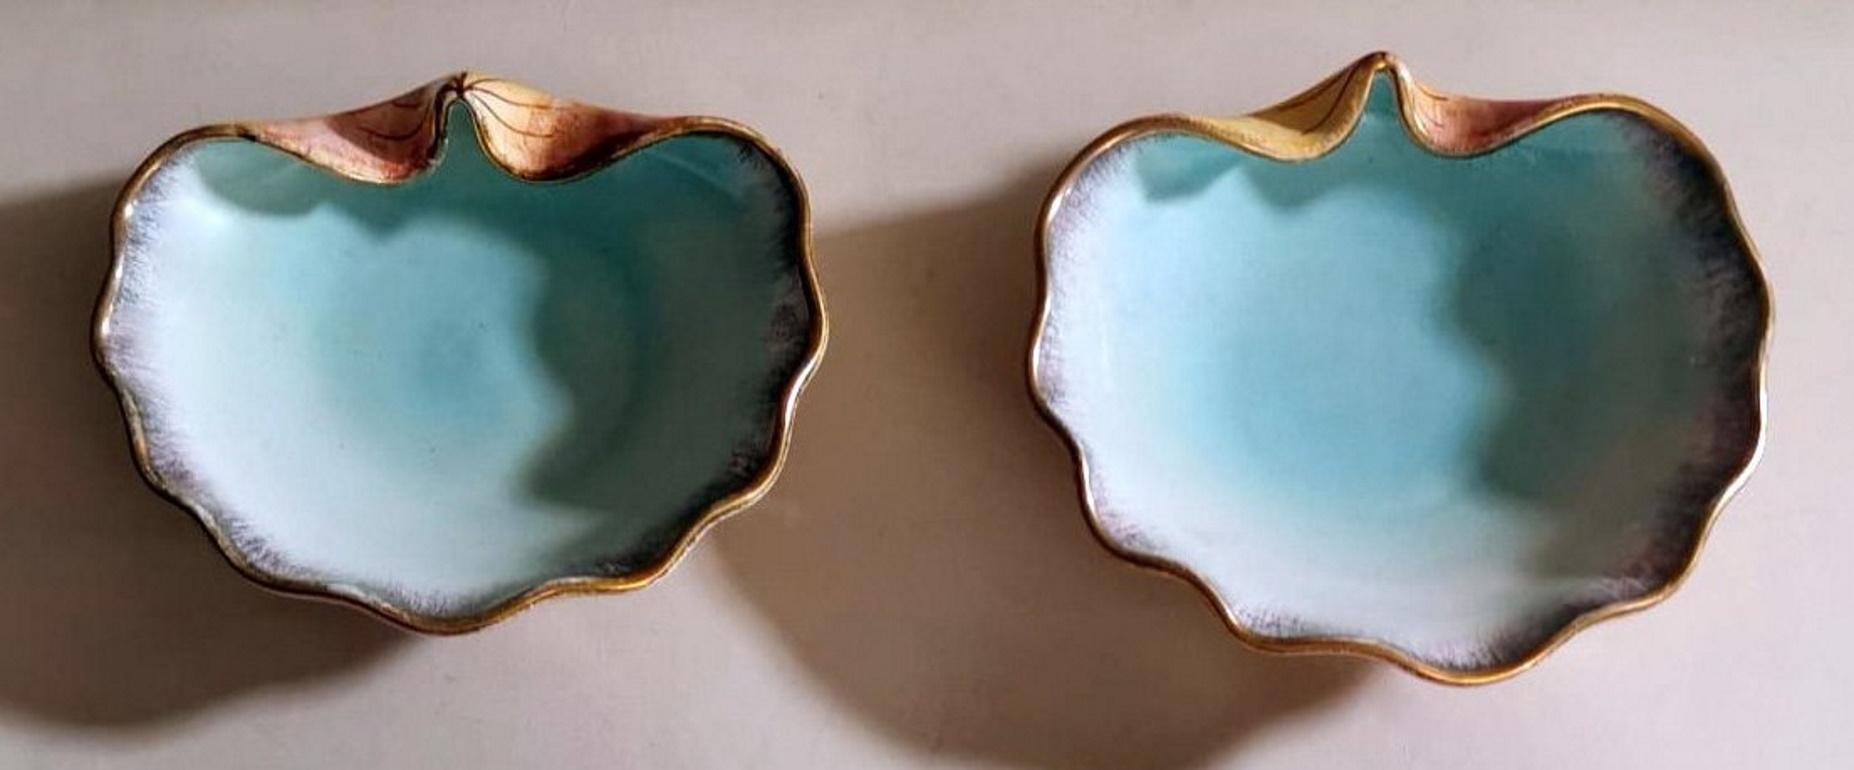 Art Nouveau Rometti Ceramiche Umbria 'Italy' Set of 4 Shell-Shaped Ceramic Ashtrays For Sale